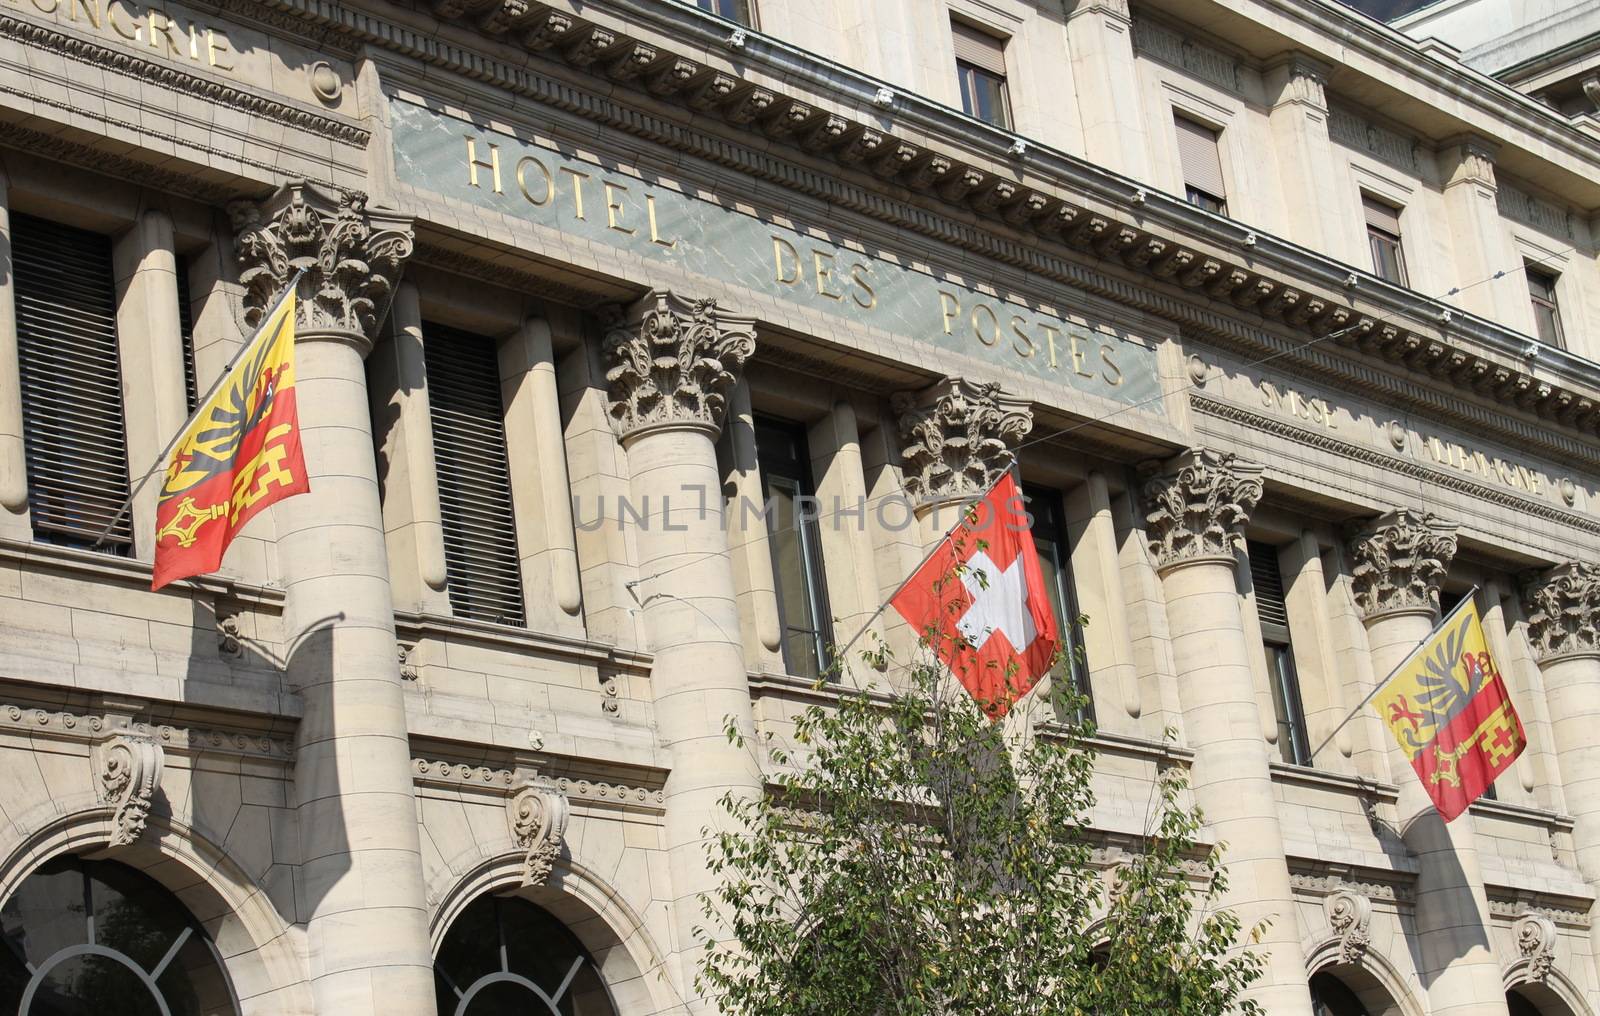 Post office facade, Geneva, Switzerland by Elenaphotos21